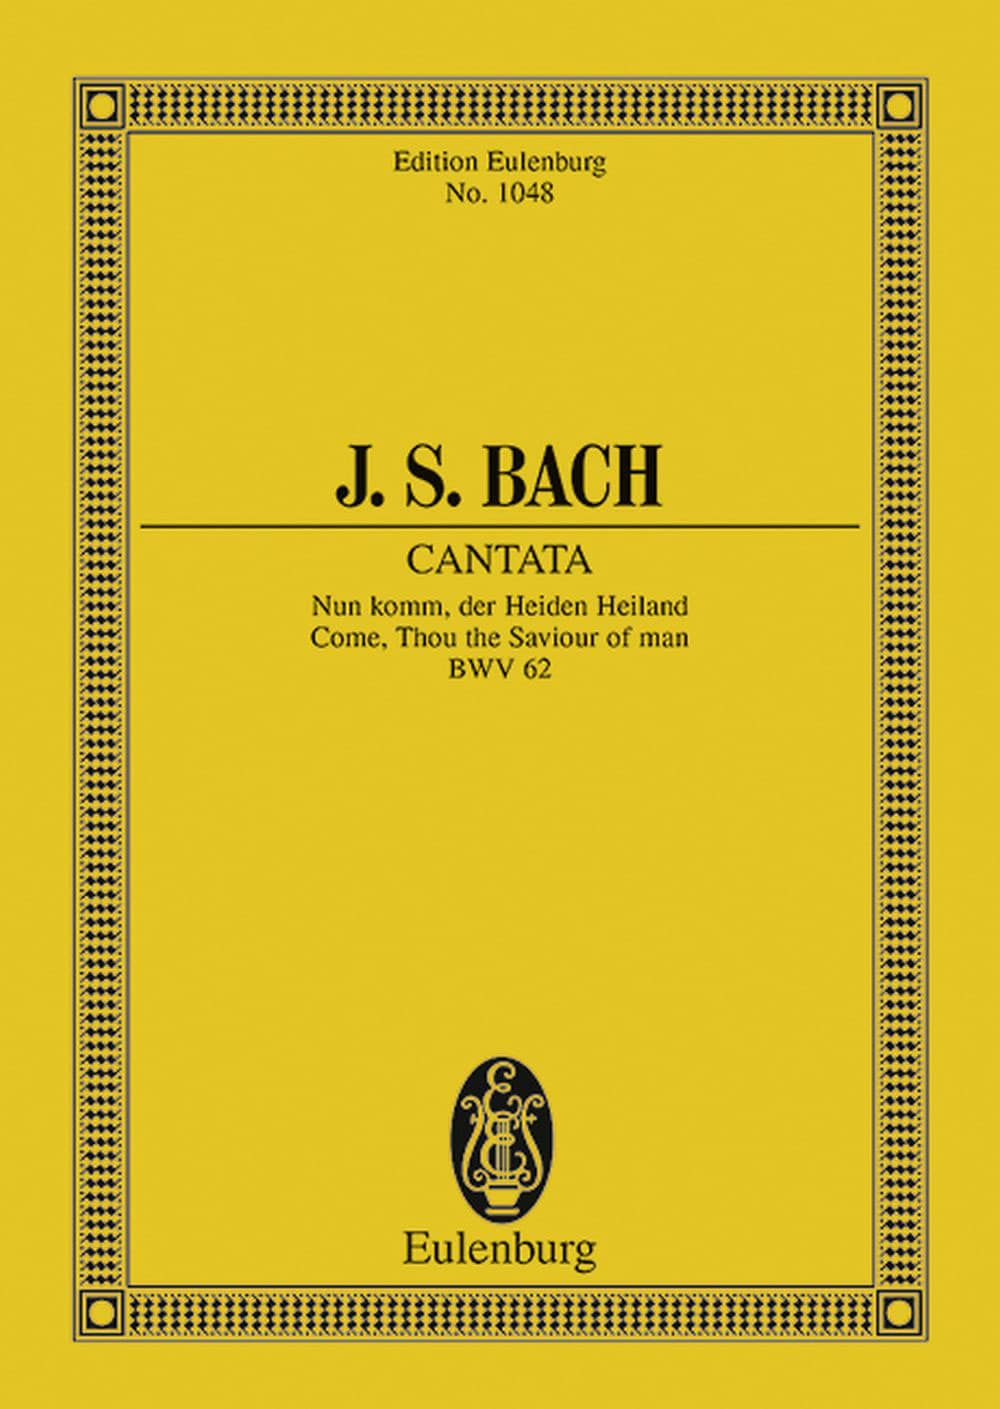 EULENBURG BACH J.S. - CANTATA NO.62 (ADVENTUS CHRISTI) BWV 62 - 3 SOLO PARTS, CHOIR AND ORCHESTRA